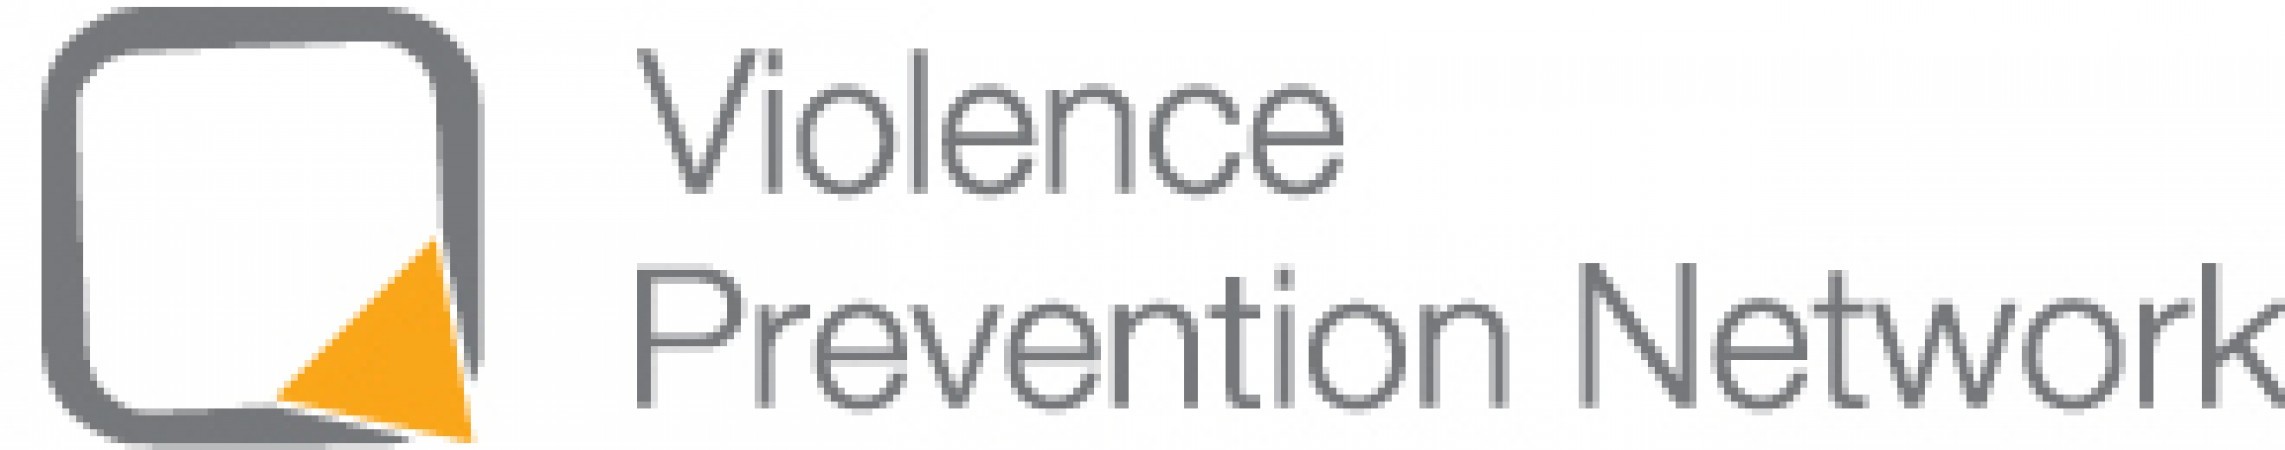 Violence Prevention Network